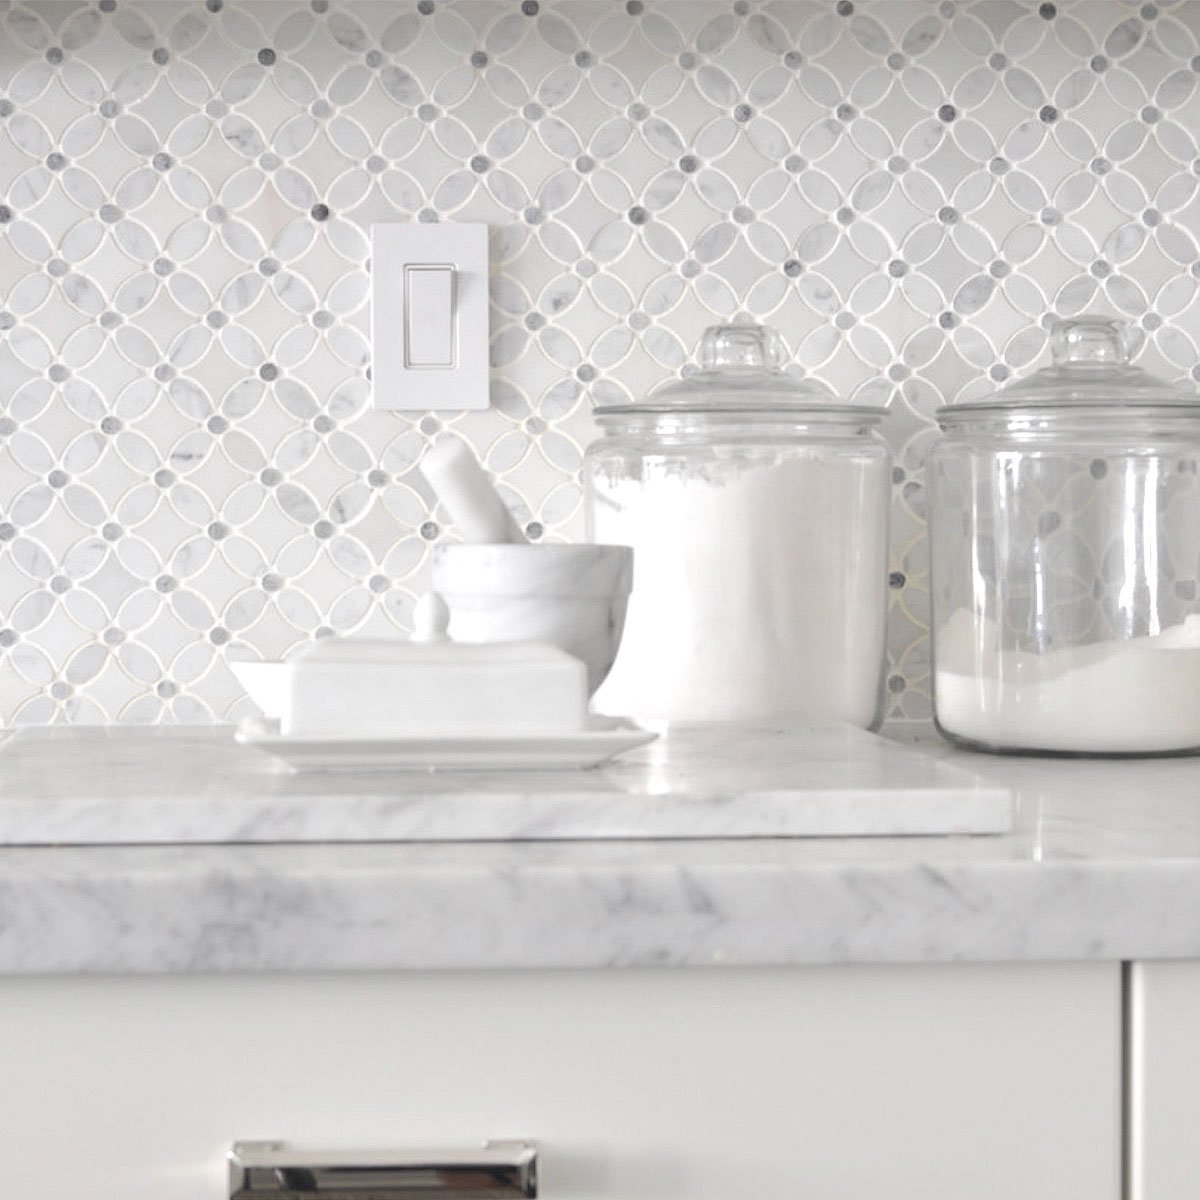 Marble Flower patterned tile on kitchen backsplash with white cabinets.